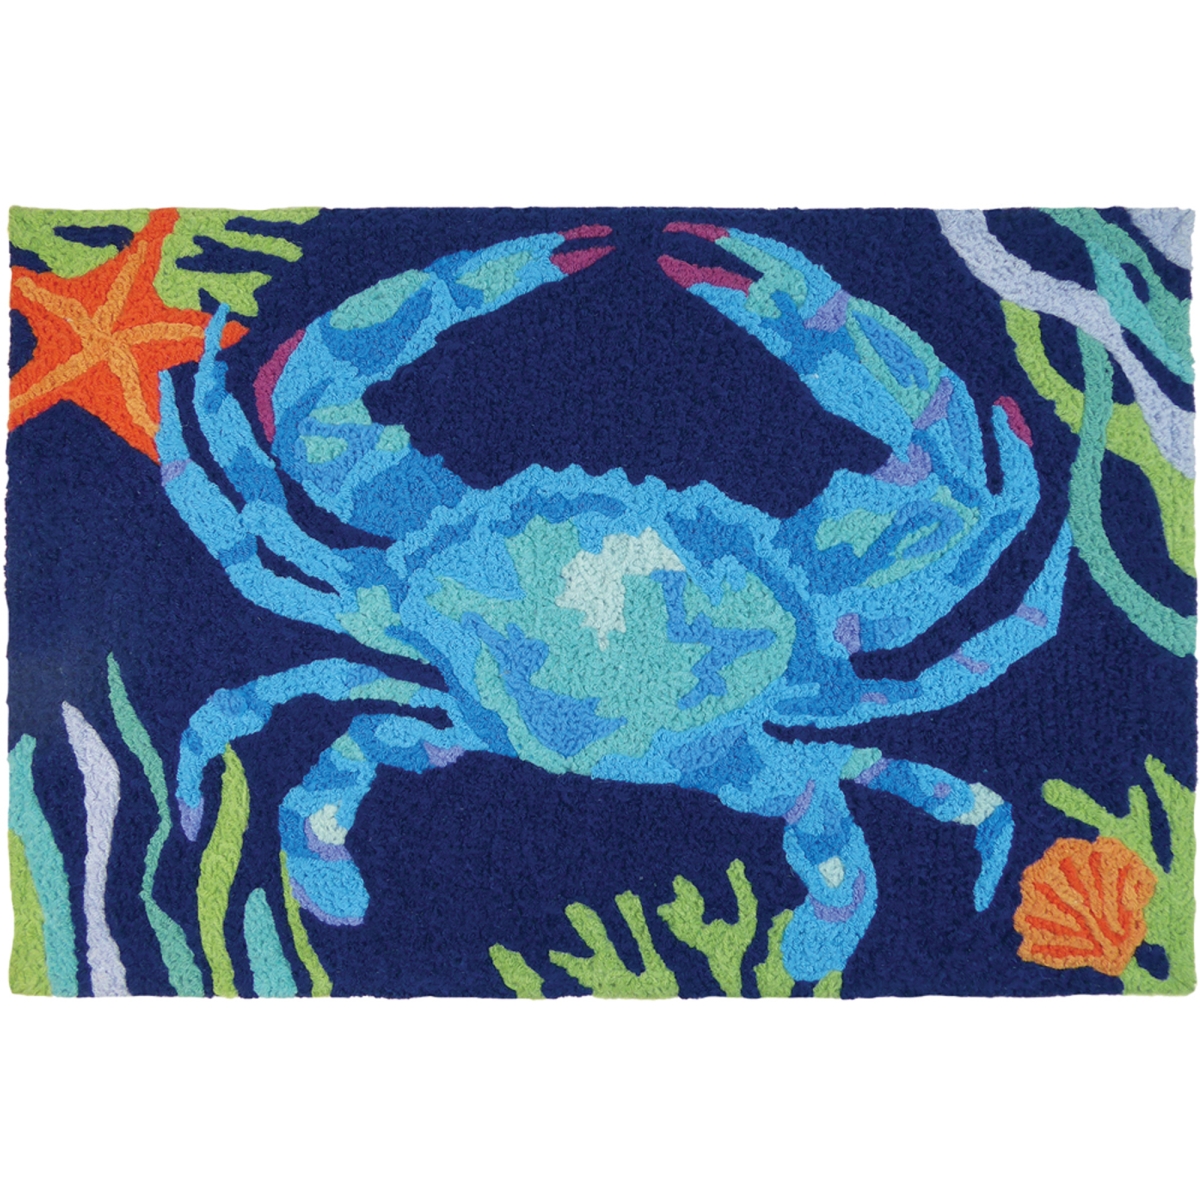 Jb-at020 20 X 30 In. Deep Blue Crab Rug